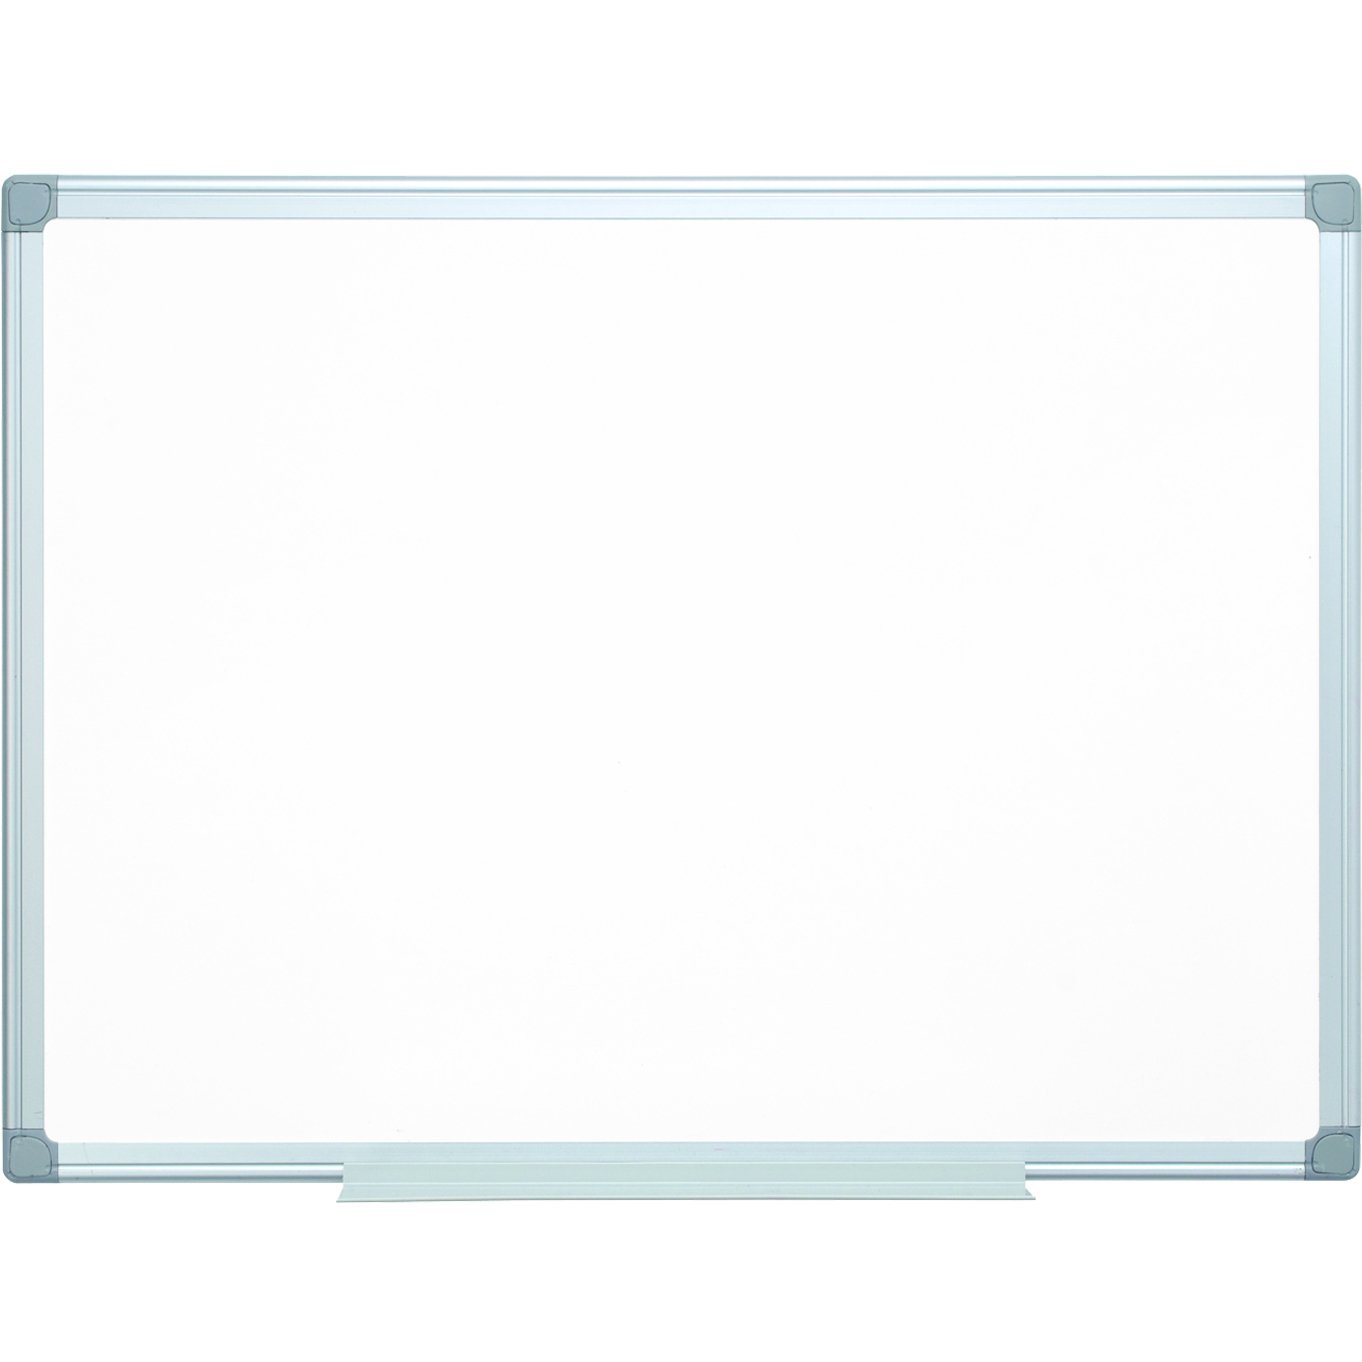 Q-connect emaljeret whiteboardtavle 450 mm x 600 mm, Stål/Aluminium